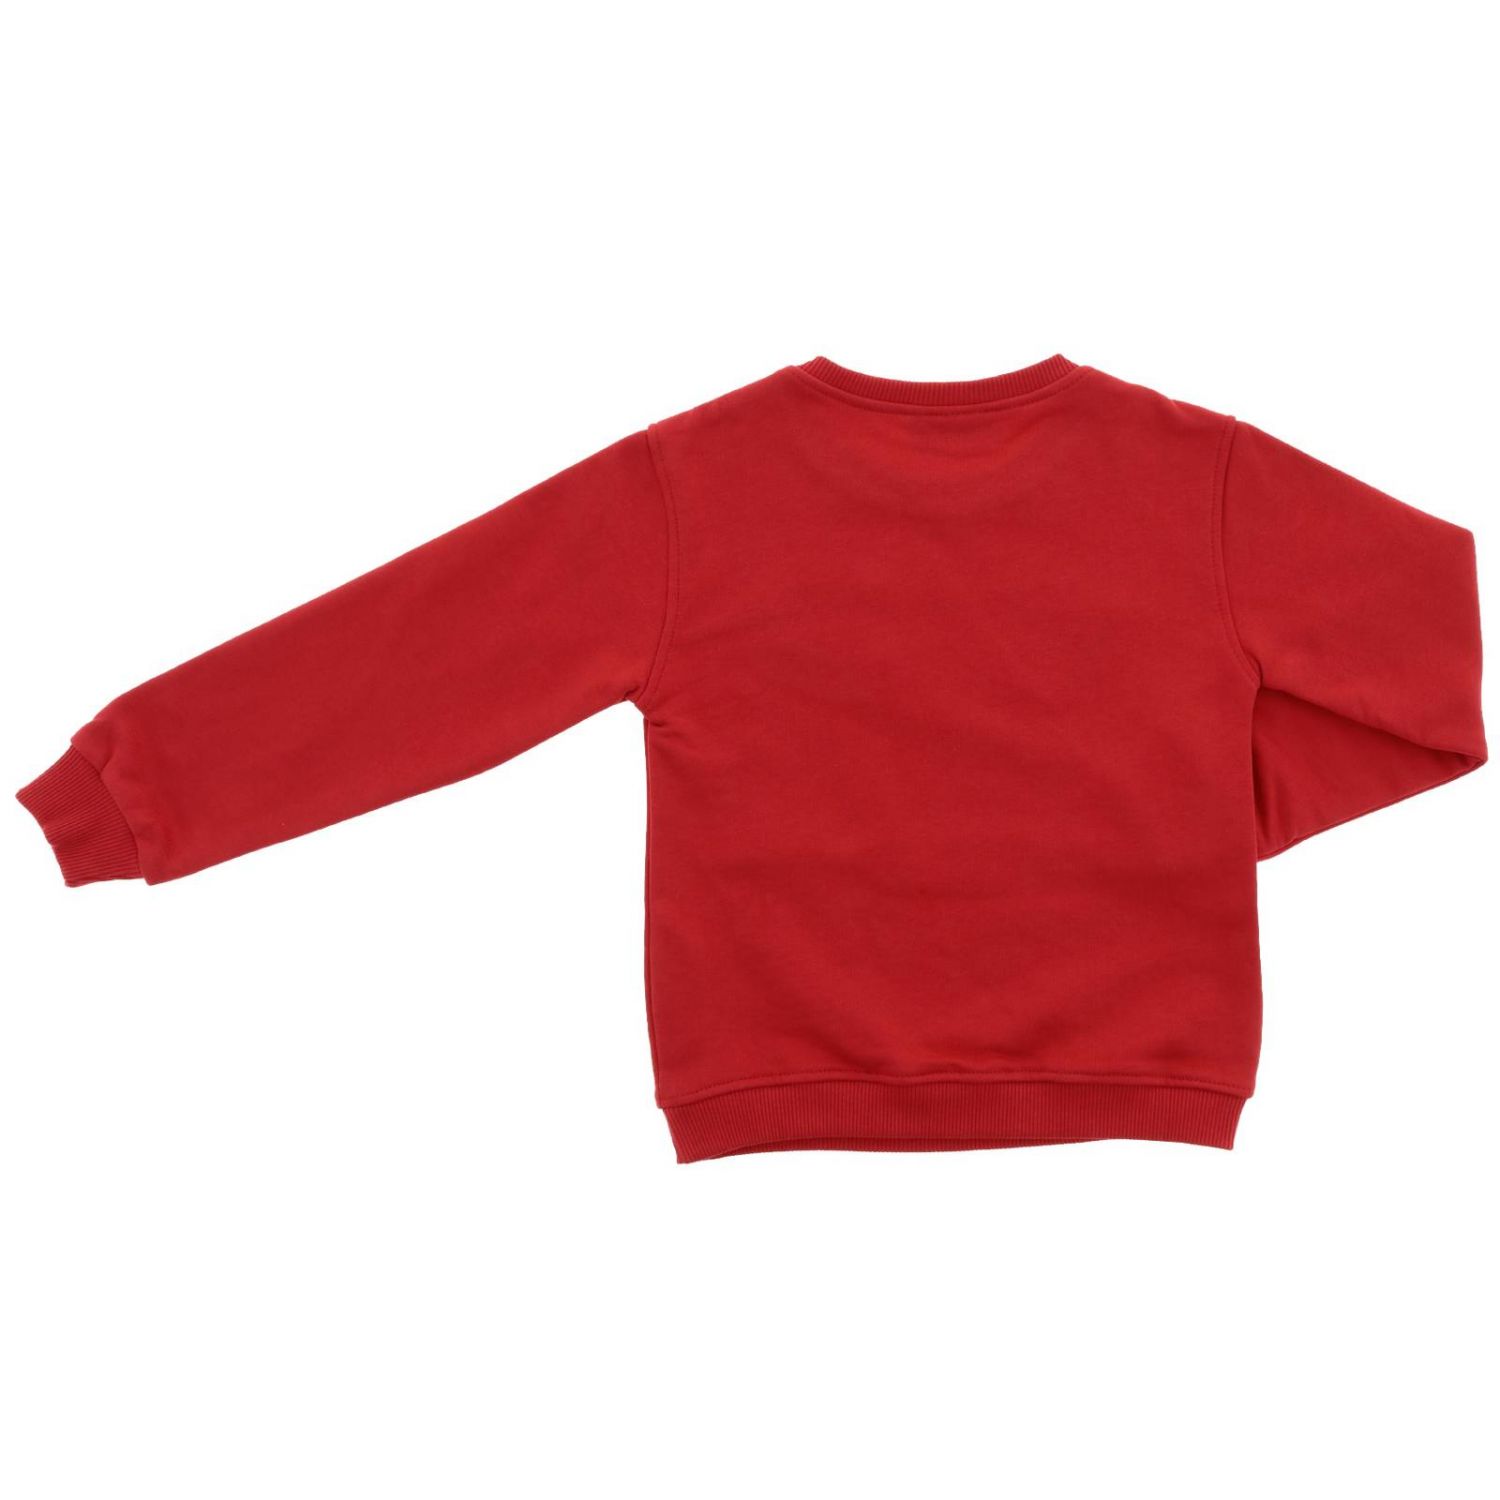 Chiara Ferragni Outlet: Sweater kids - Red | Sweater Chiara Ferragni ...